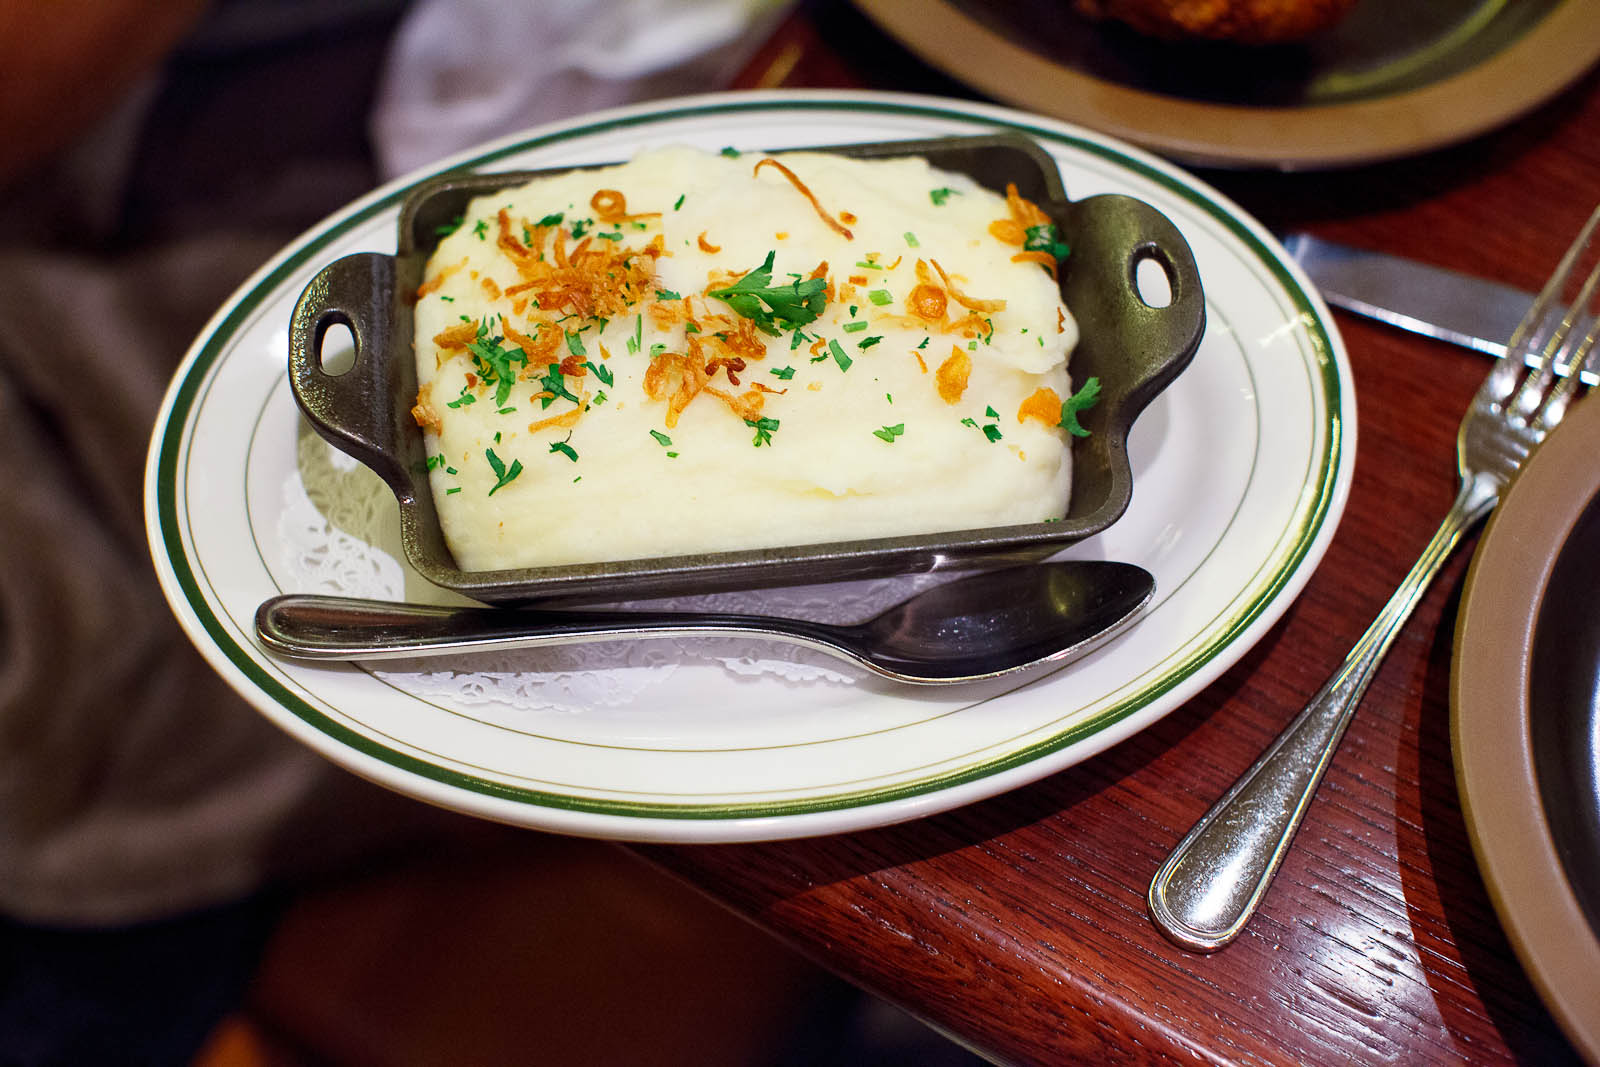 Buttermilk mashed potatoes ($7)